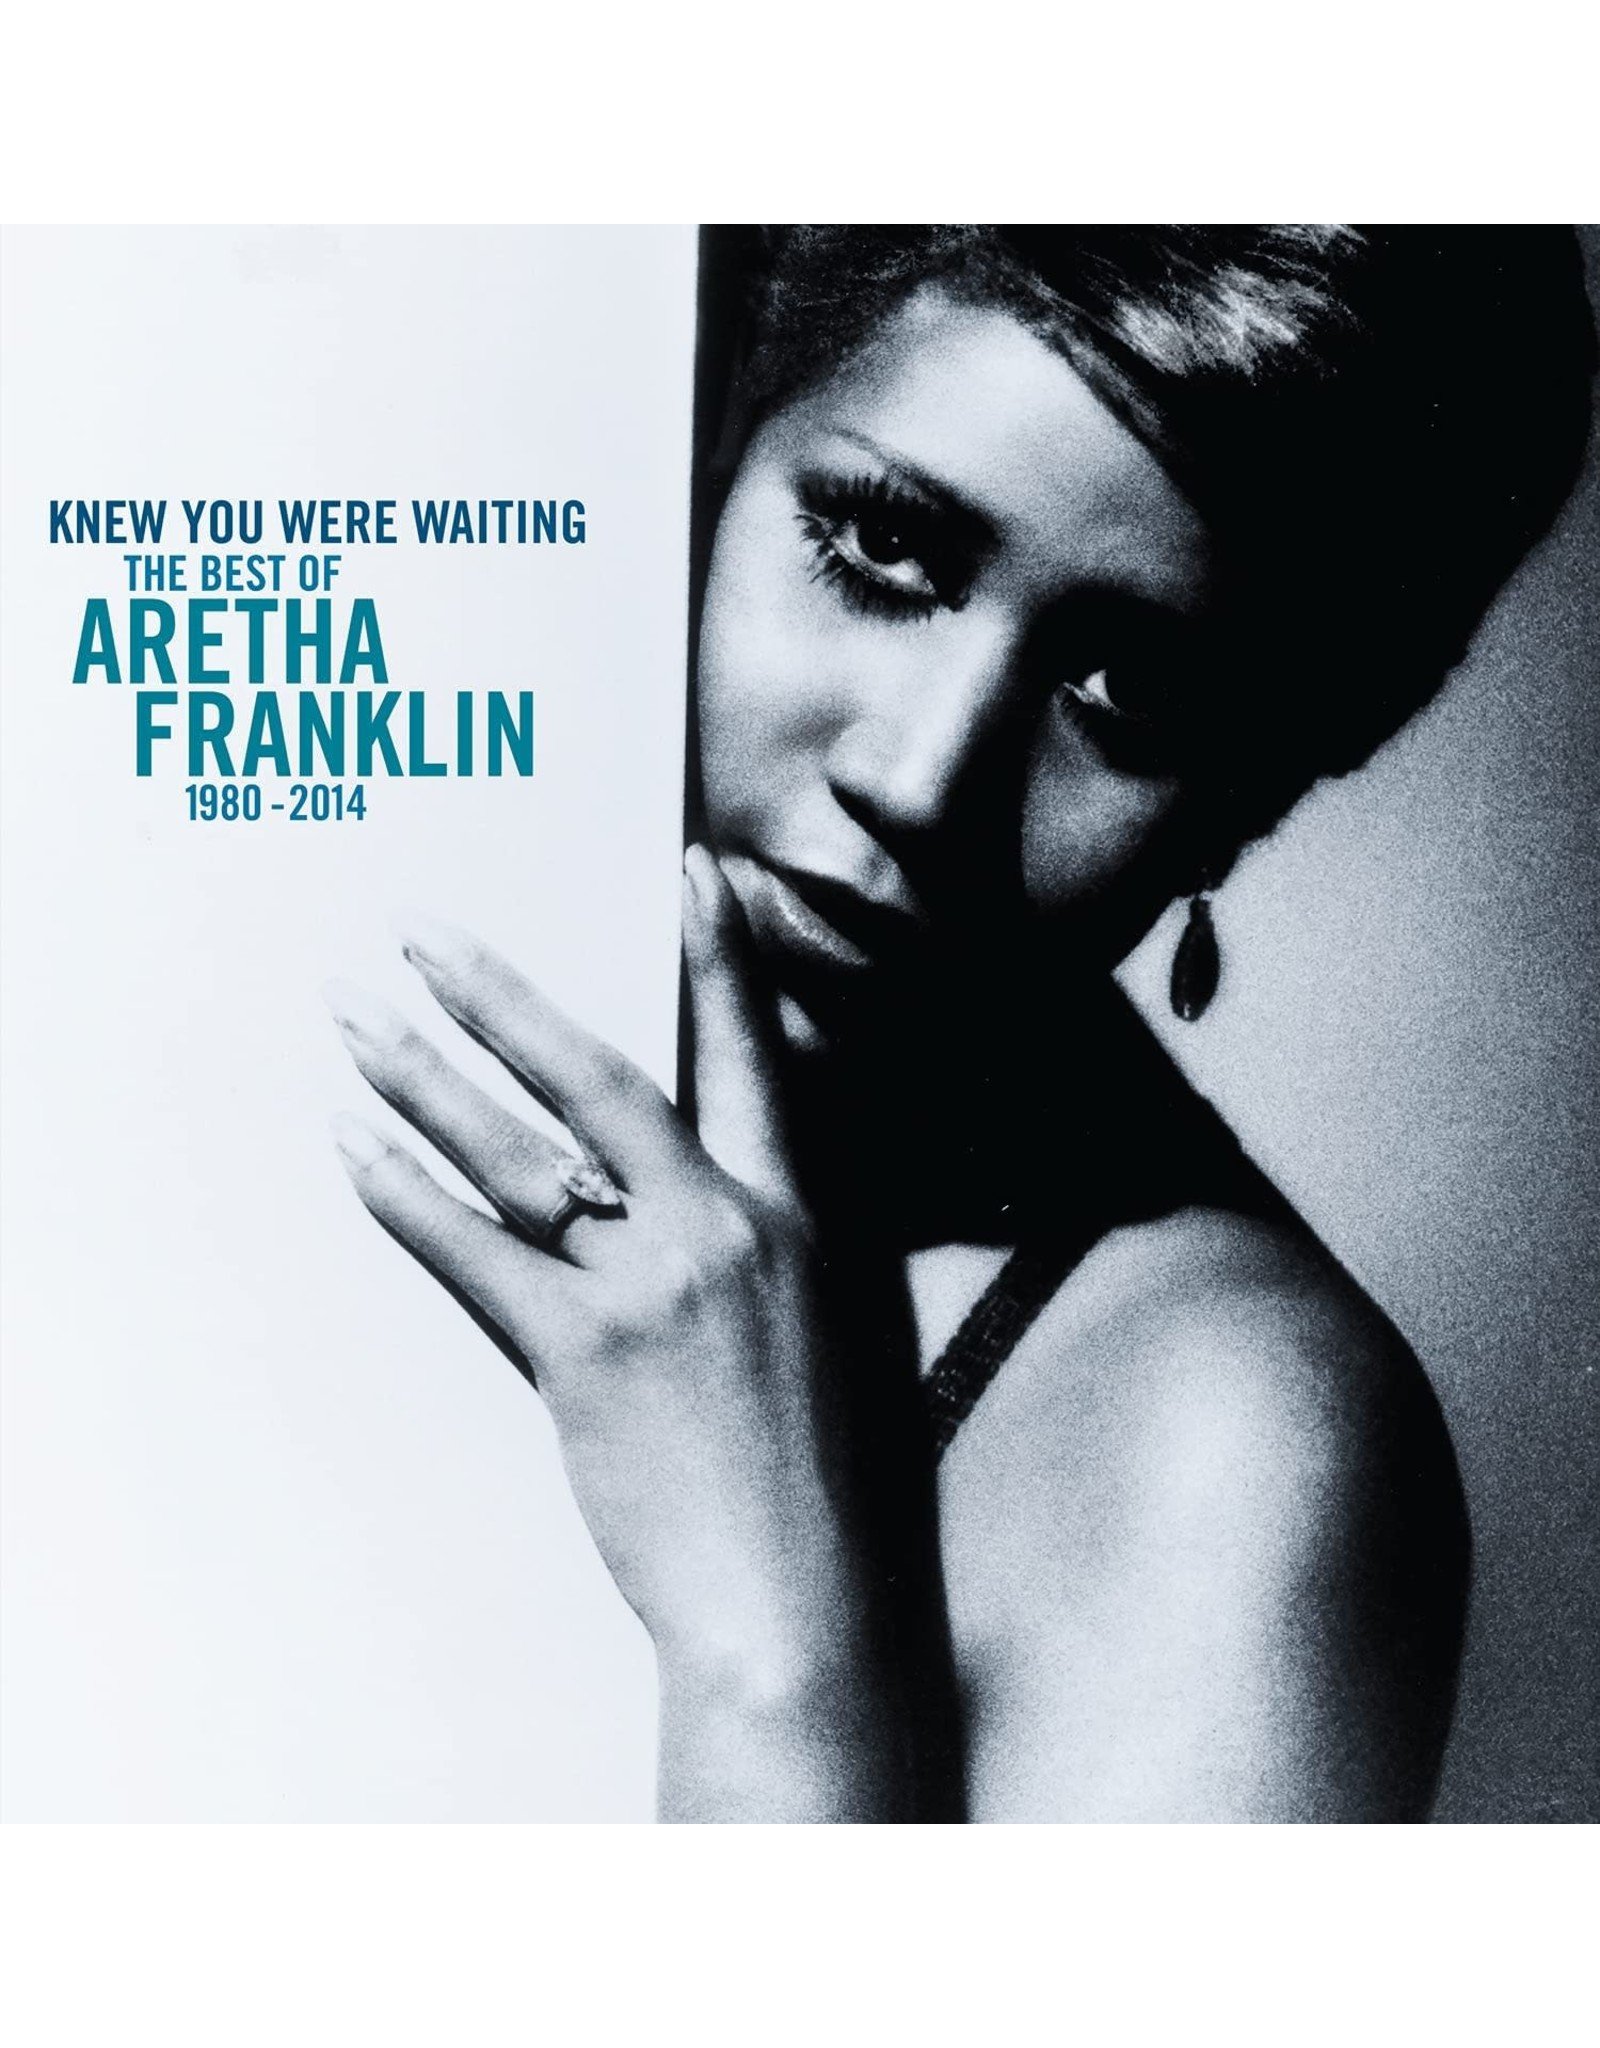 Aretha Franklin - Knew You Were Waiting (Best of Aretha Franklin: 1980 - 2014)